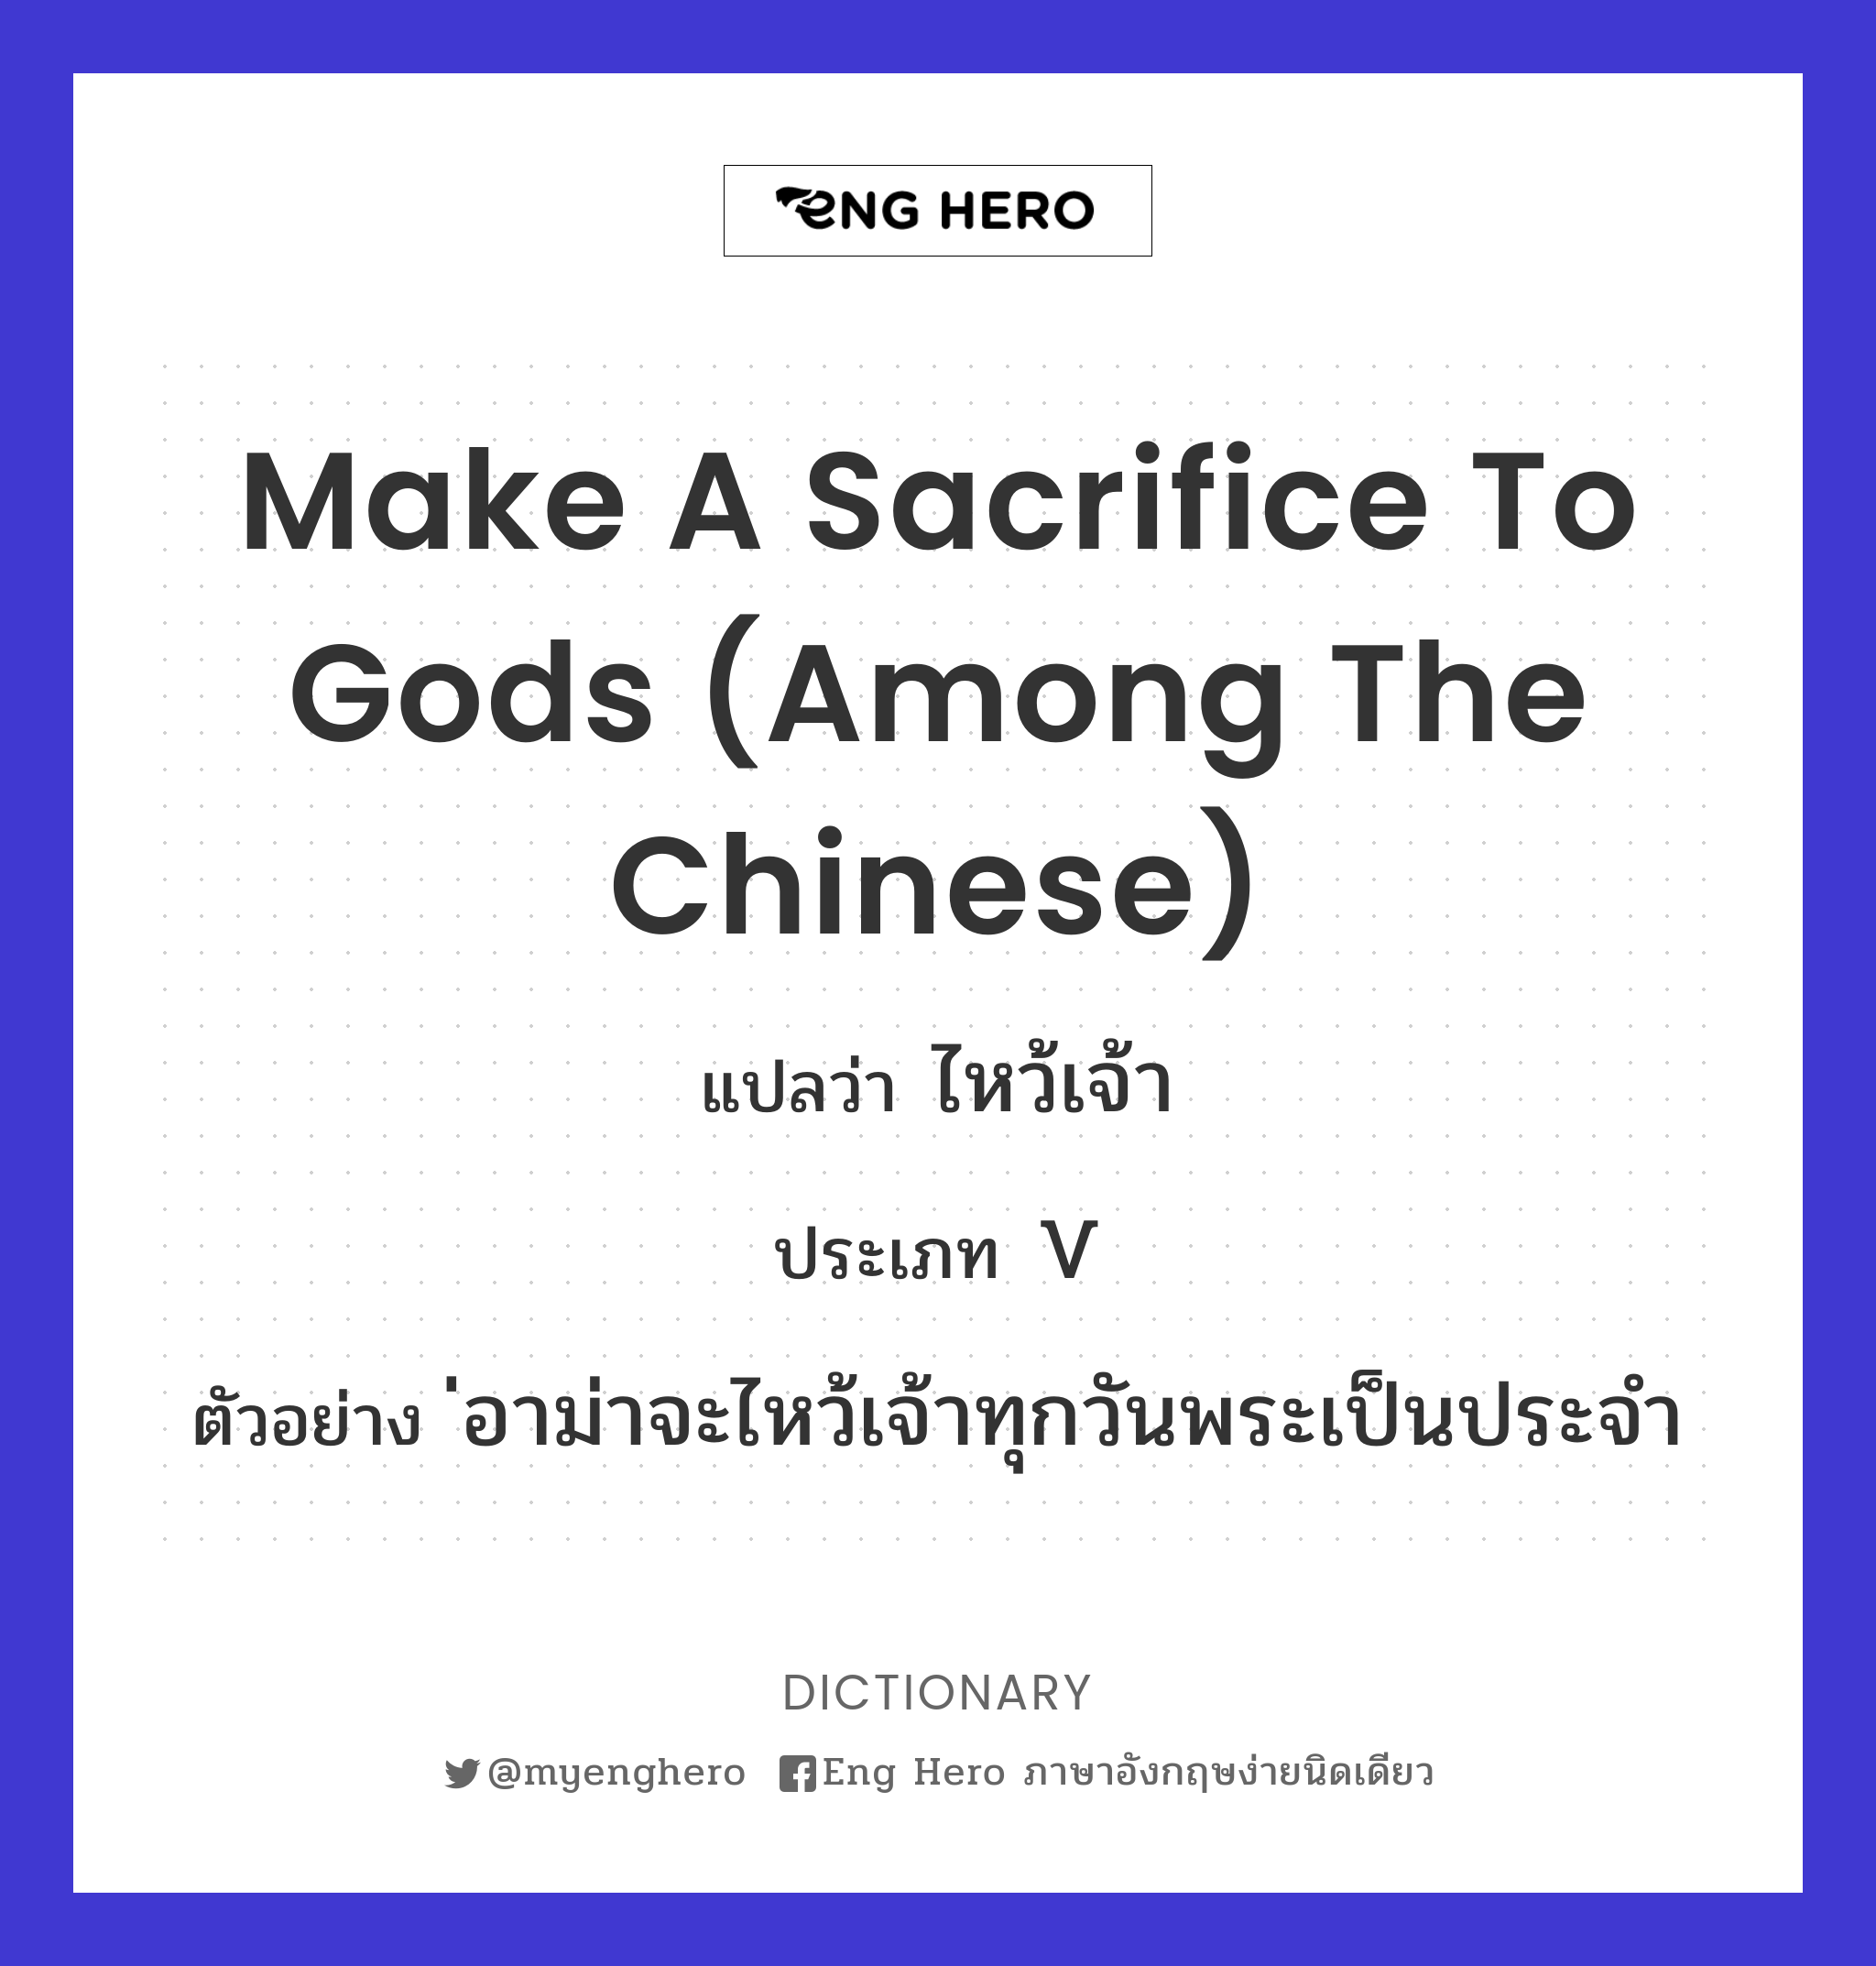 make a sacrifice to gods (among the Chinese)